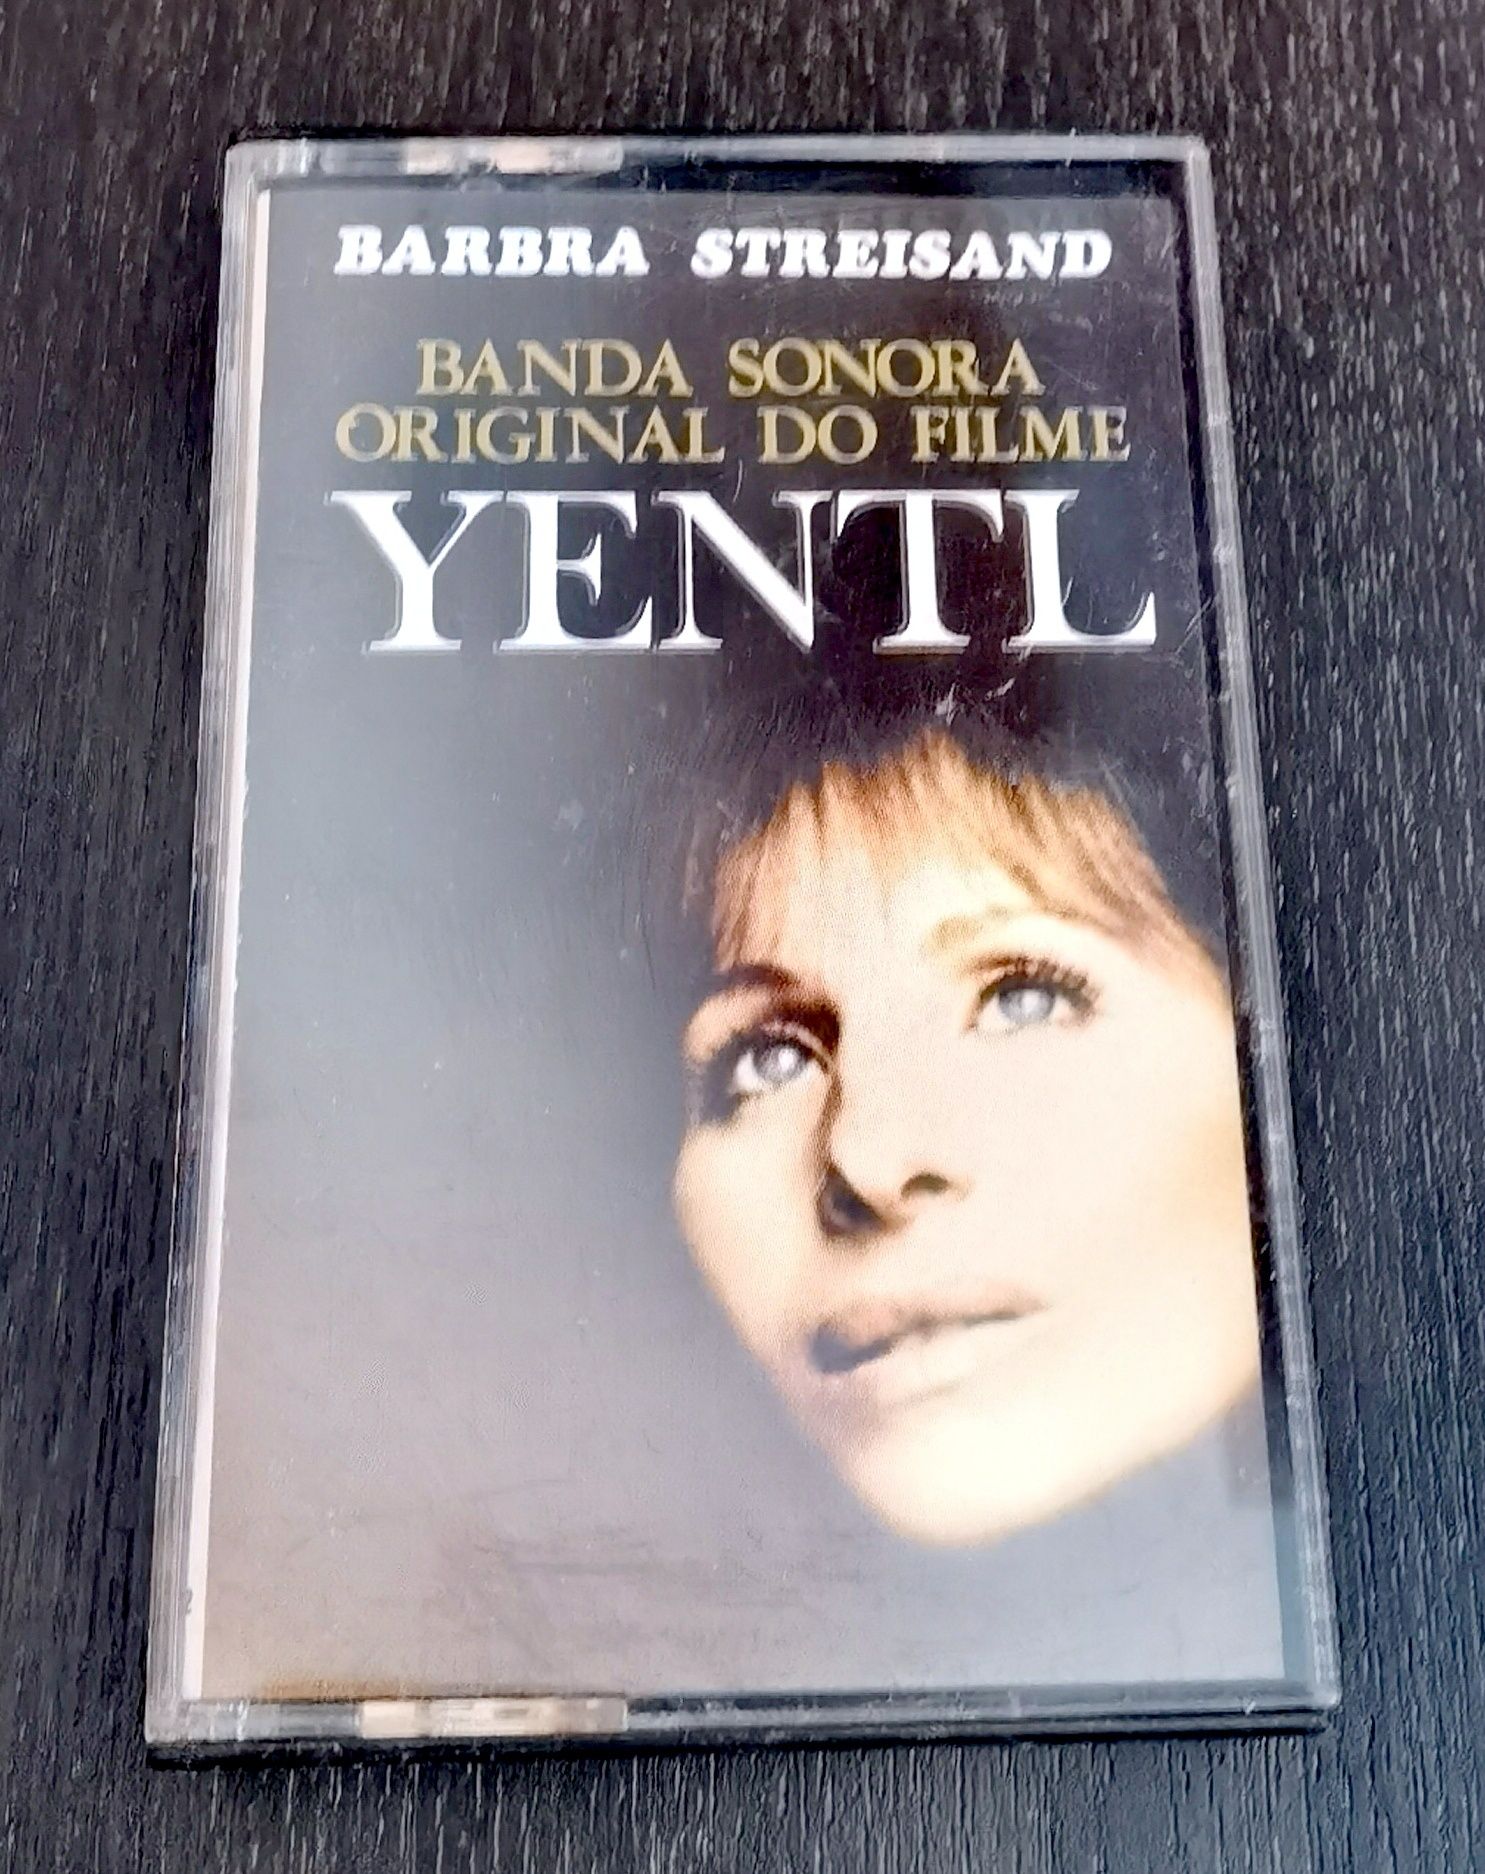 Barbra Streisand - Yentl Banda sonora cassete